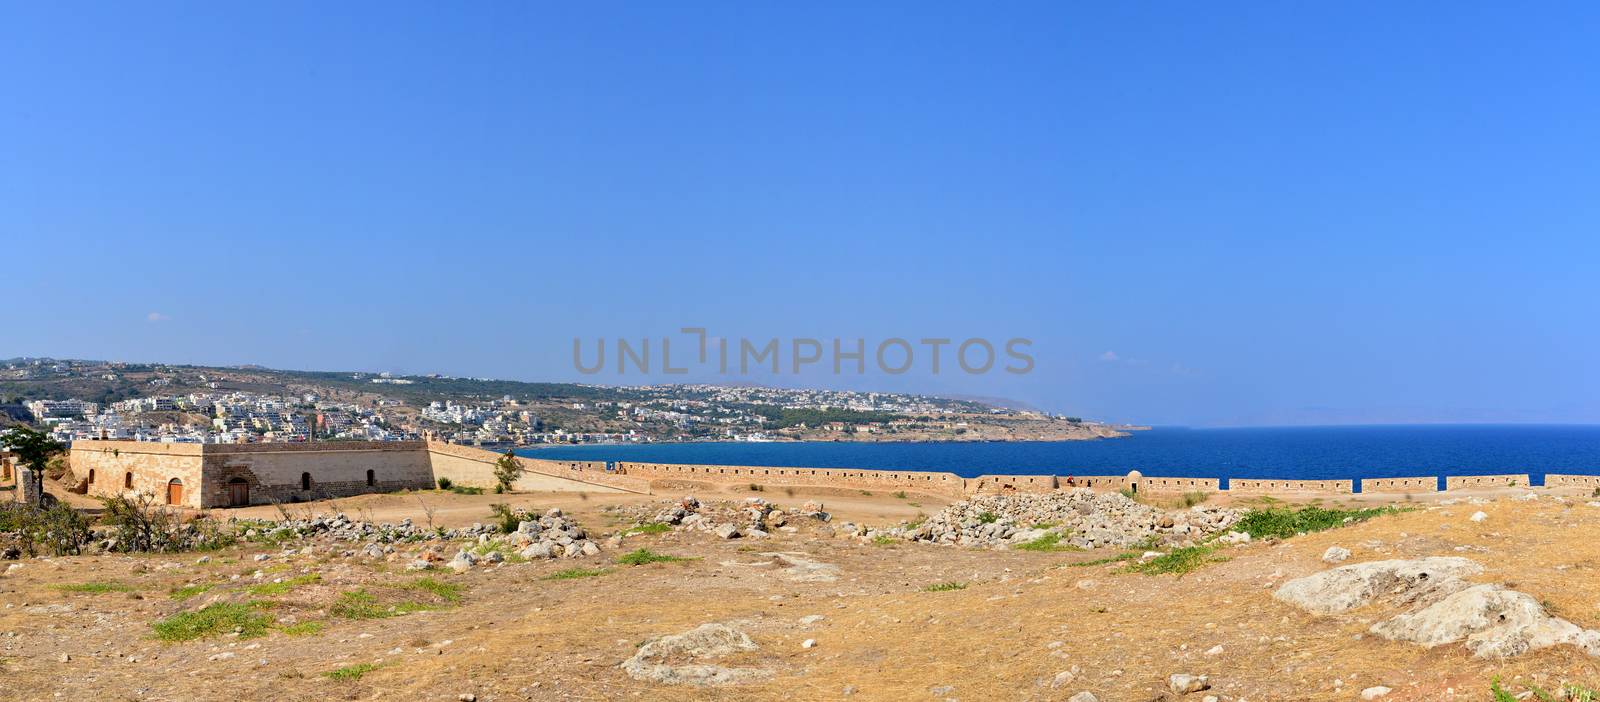 Rethymno Fortezza fortress panorama by tony4urban